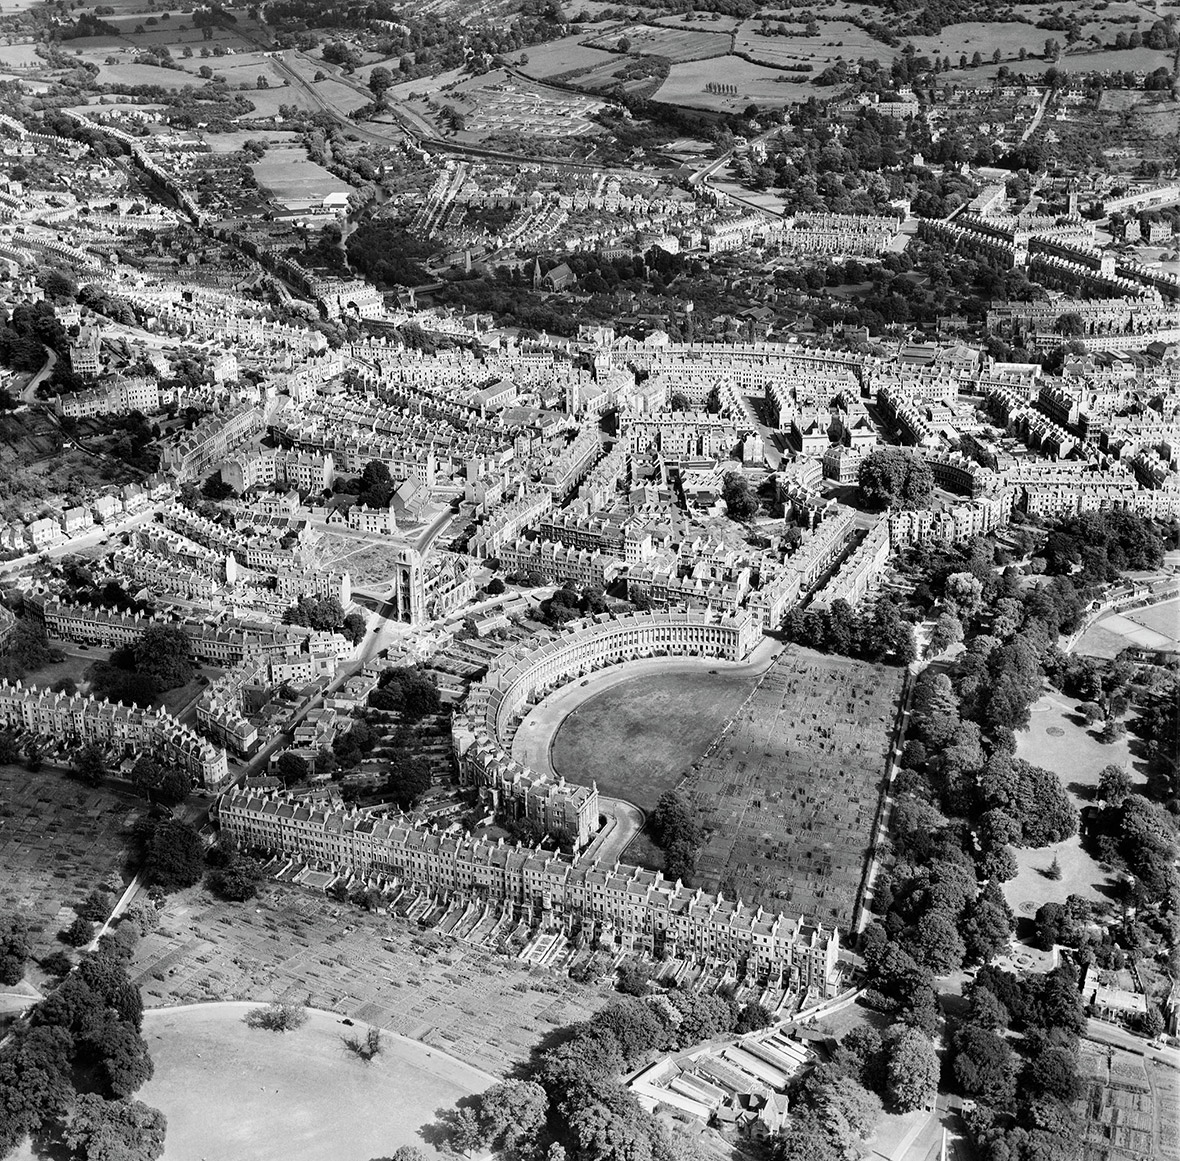 The Royal Crescent and environs, Bath, 1949